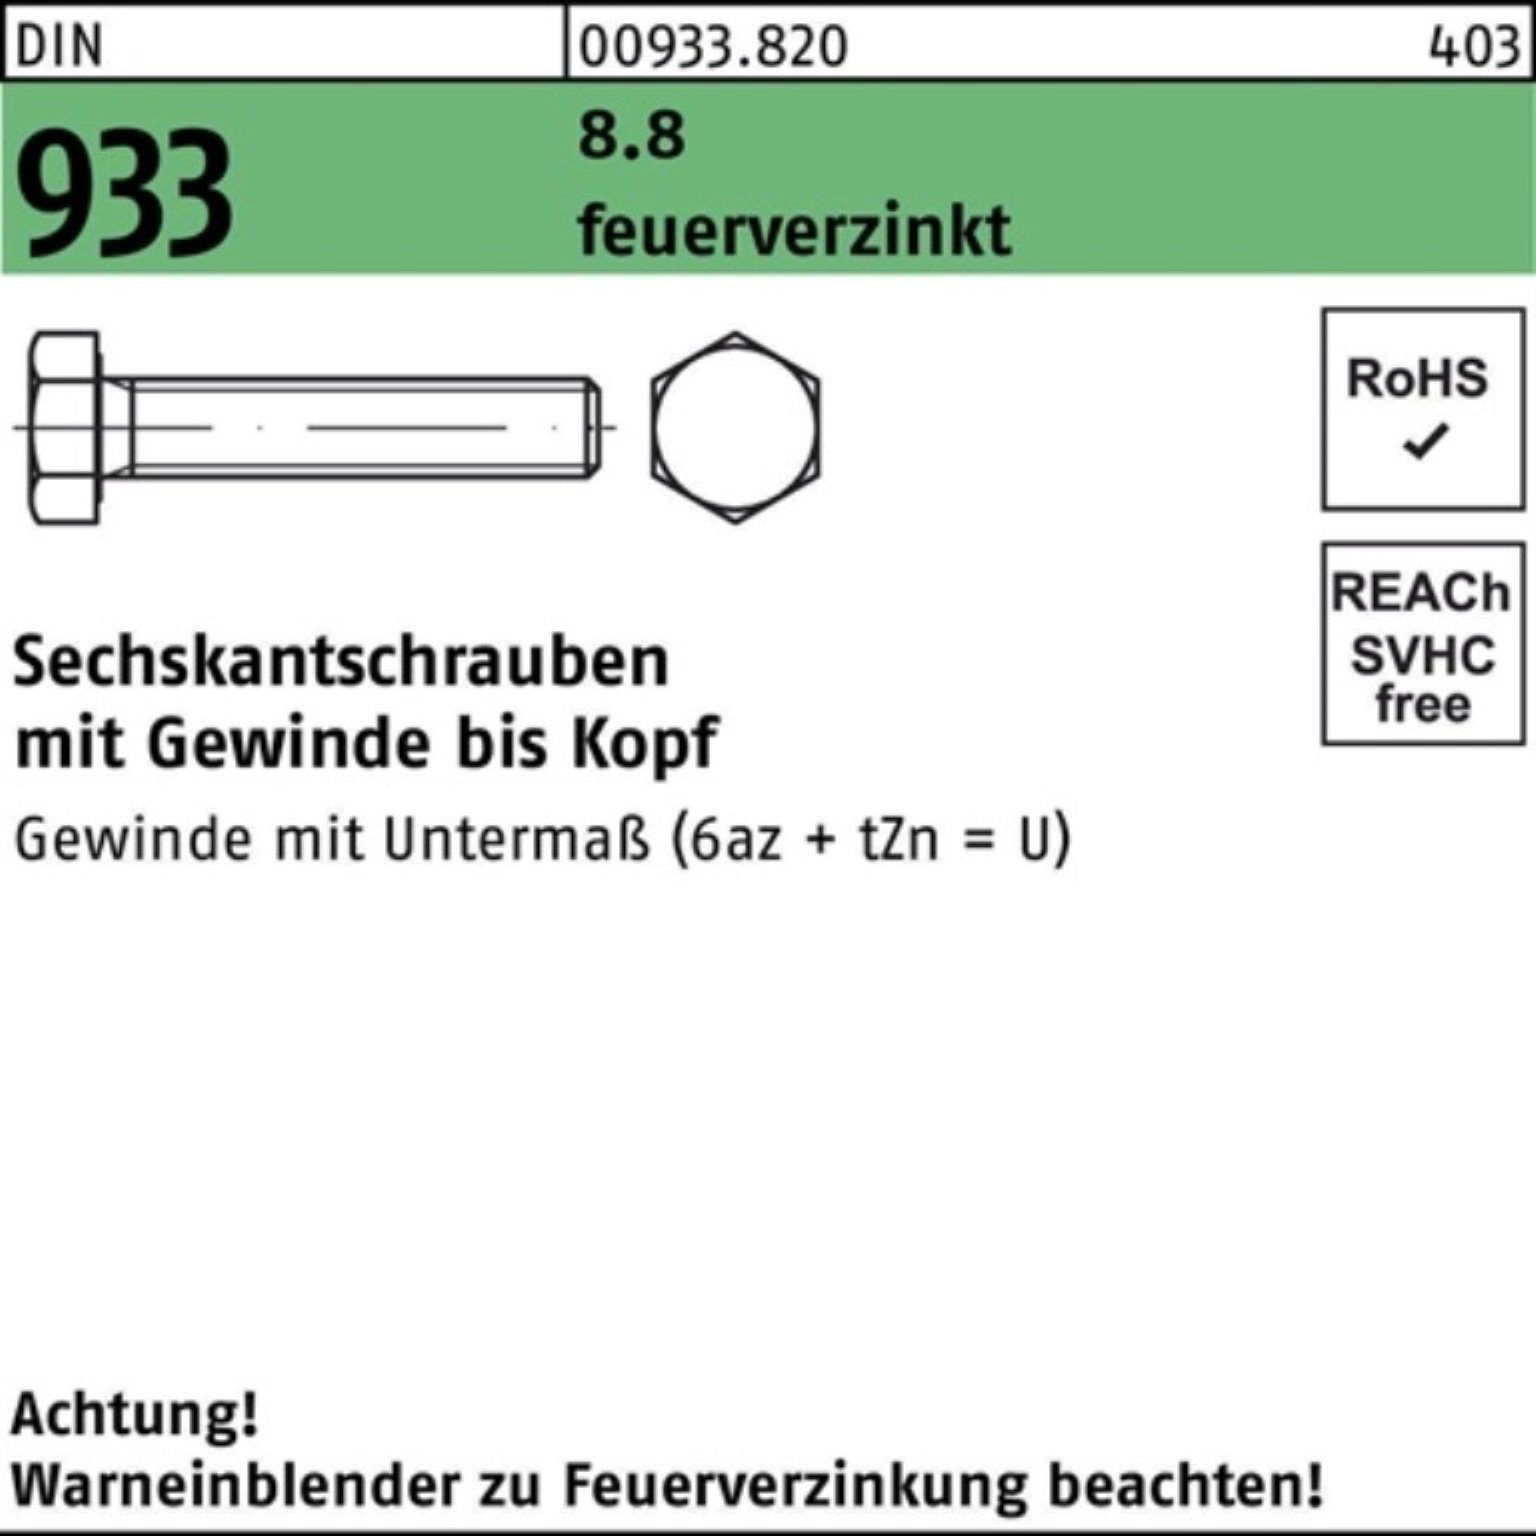 Reyher Sechskantschraube DIN 200 Stü VG 933 40 200er Pack feuerverz. Sechskantschraube 8.8 M6x